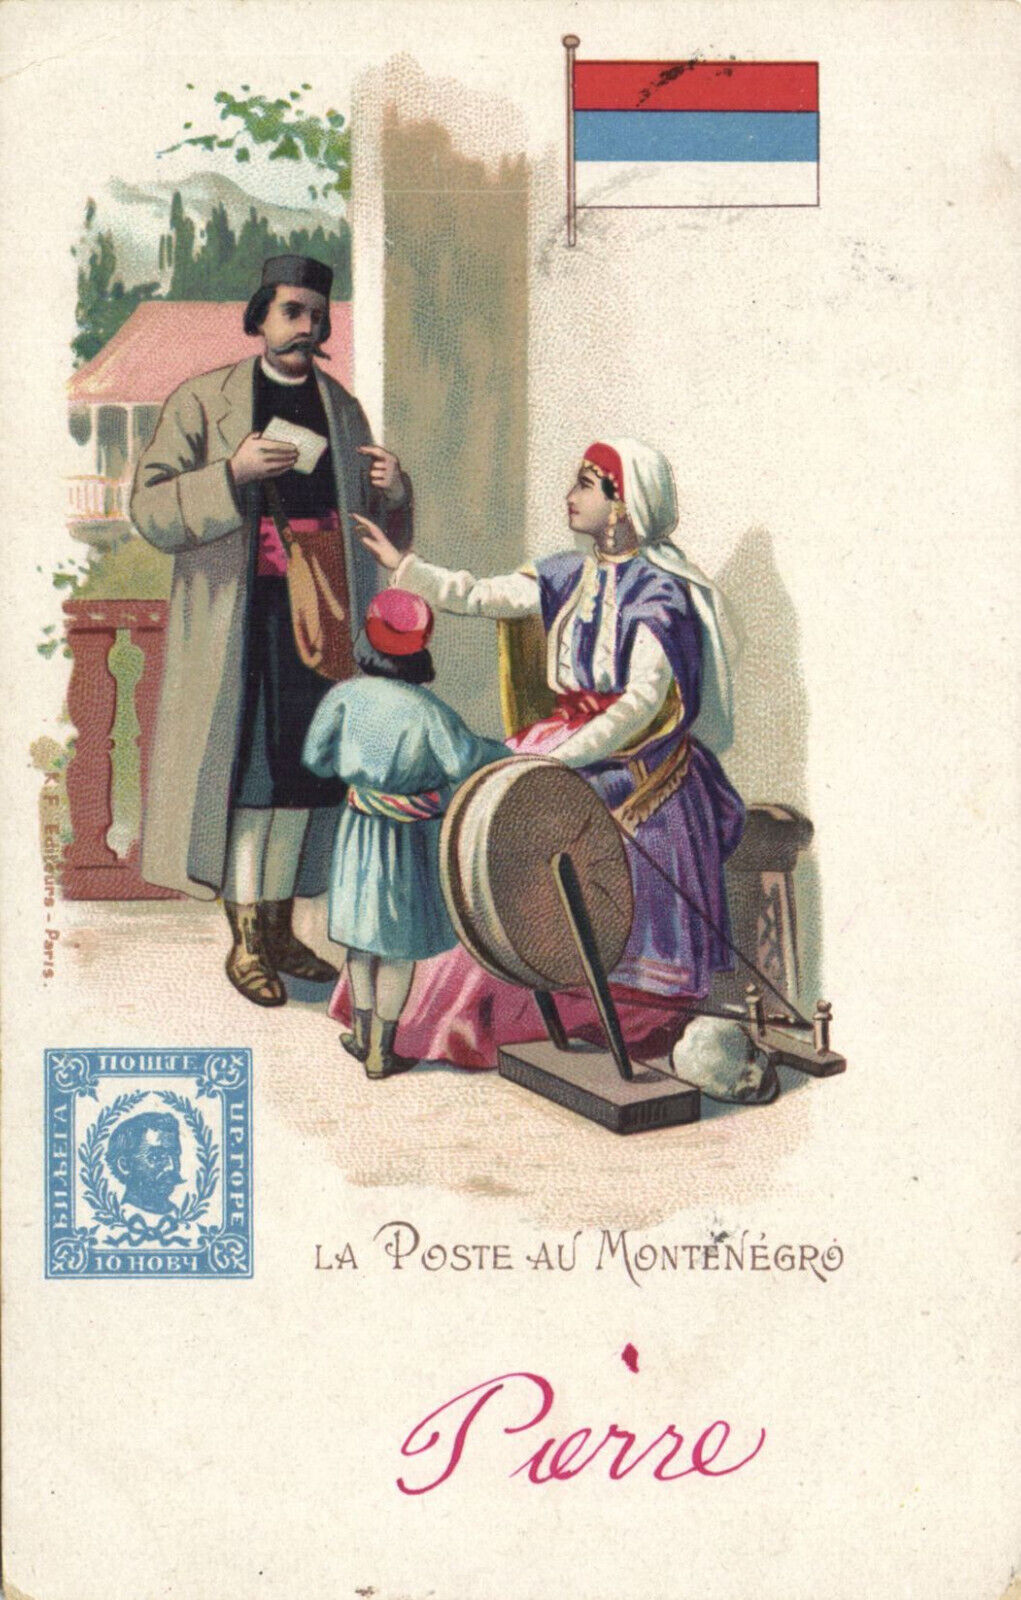 PC POSTS OF THE WORLD, LA POSTE AU MONTENEGRO, Vintage LITHO Postcard (b47888)